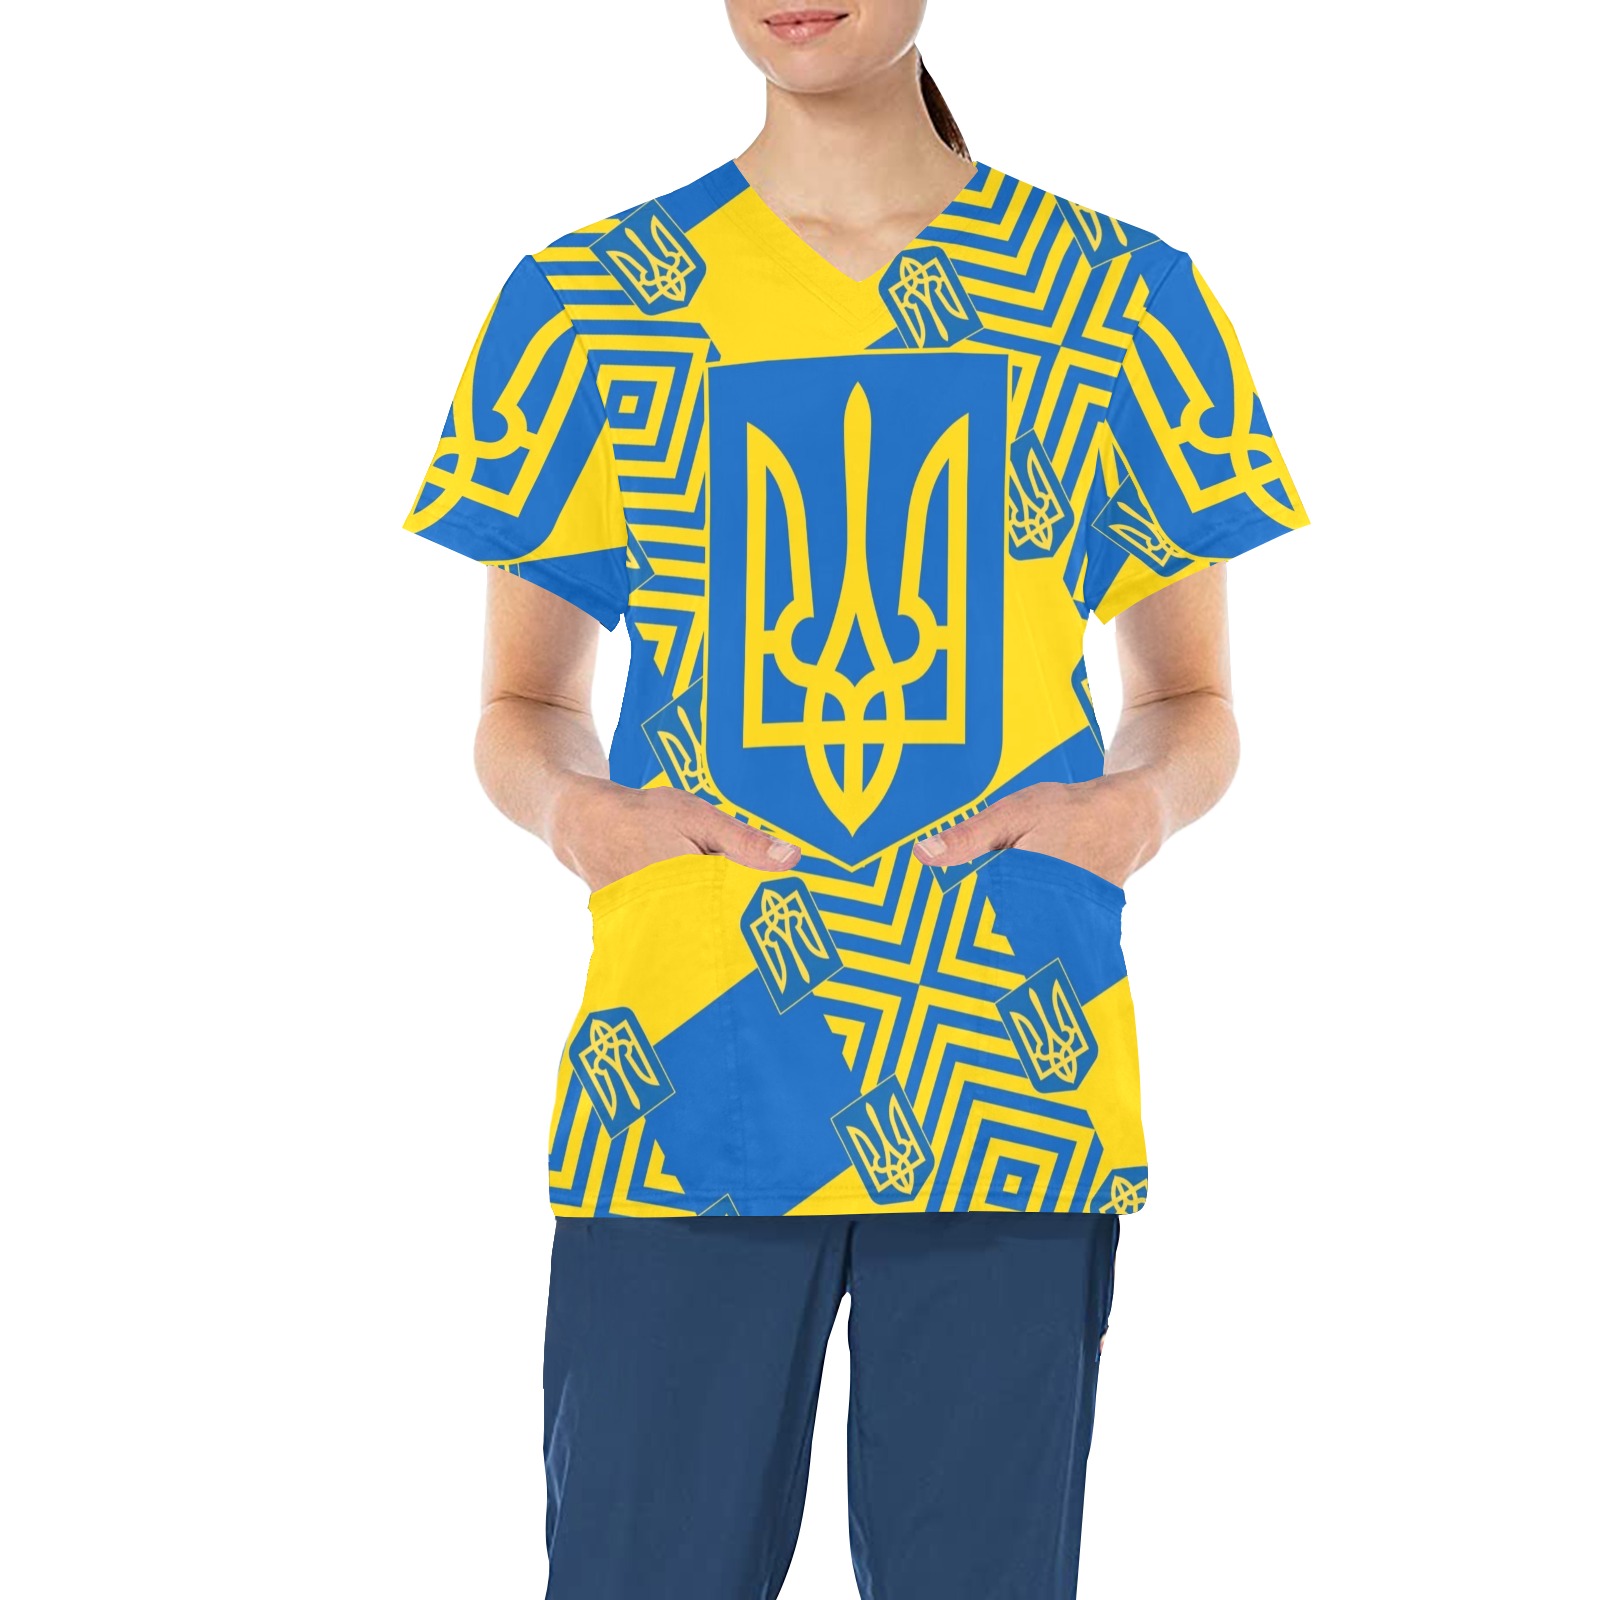 UKRAINE 2 All Over Print Scrub Top